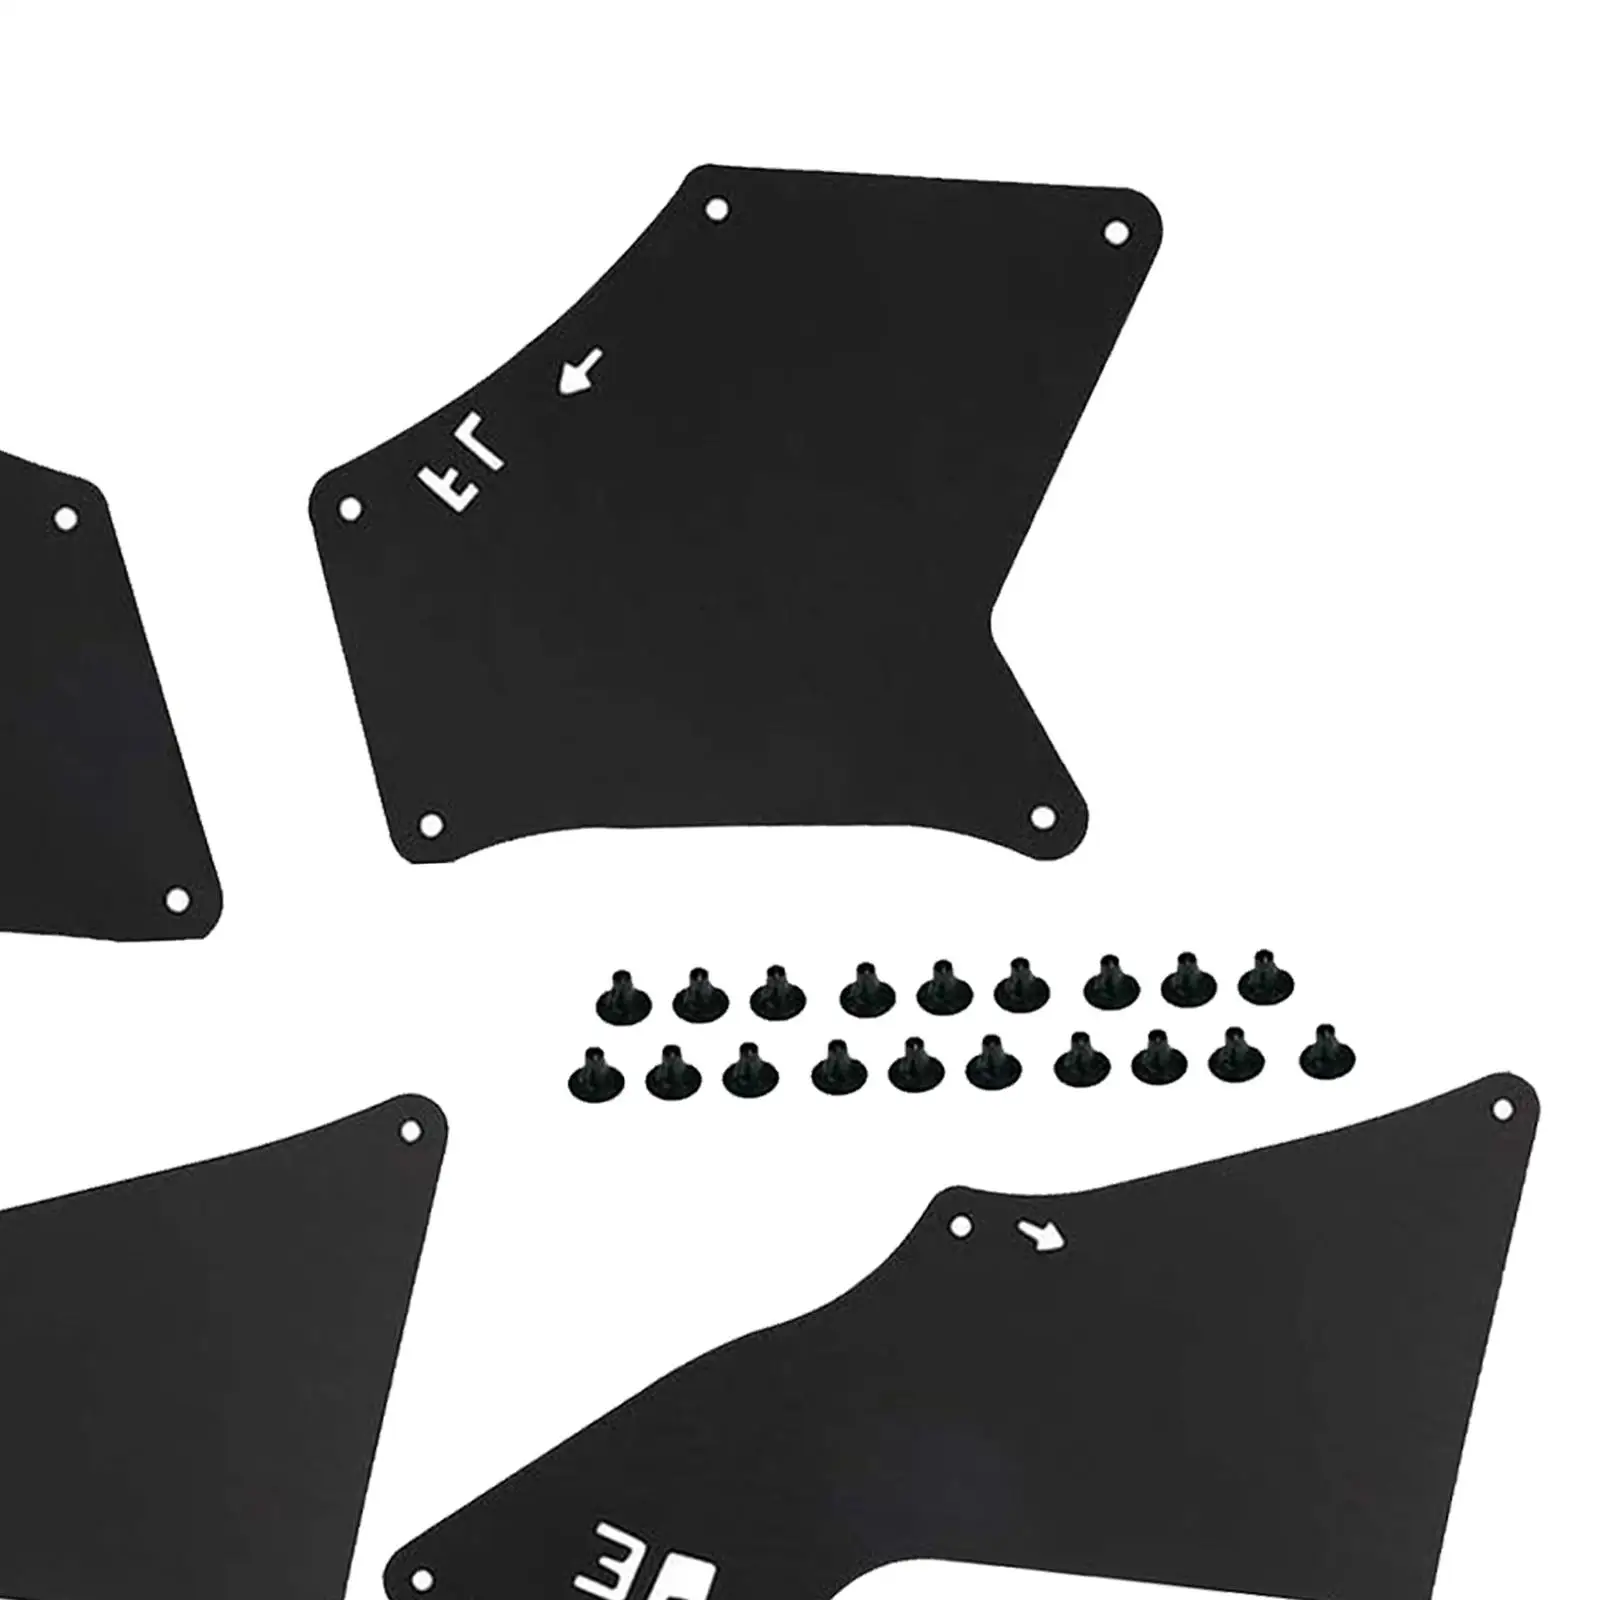 4 Pieces Splash Guard Fender Liner Shields for Toyota Overbearing Prado